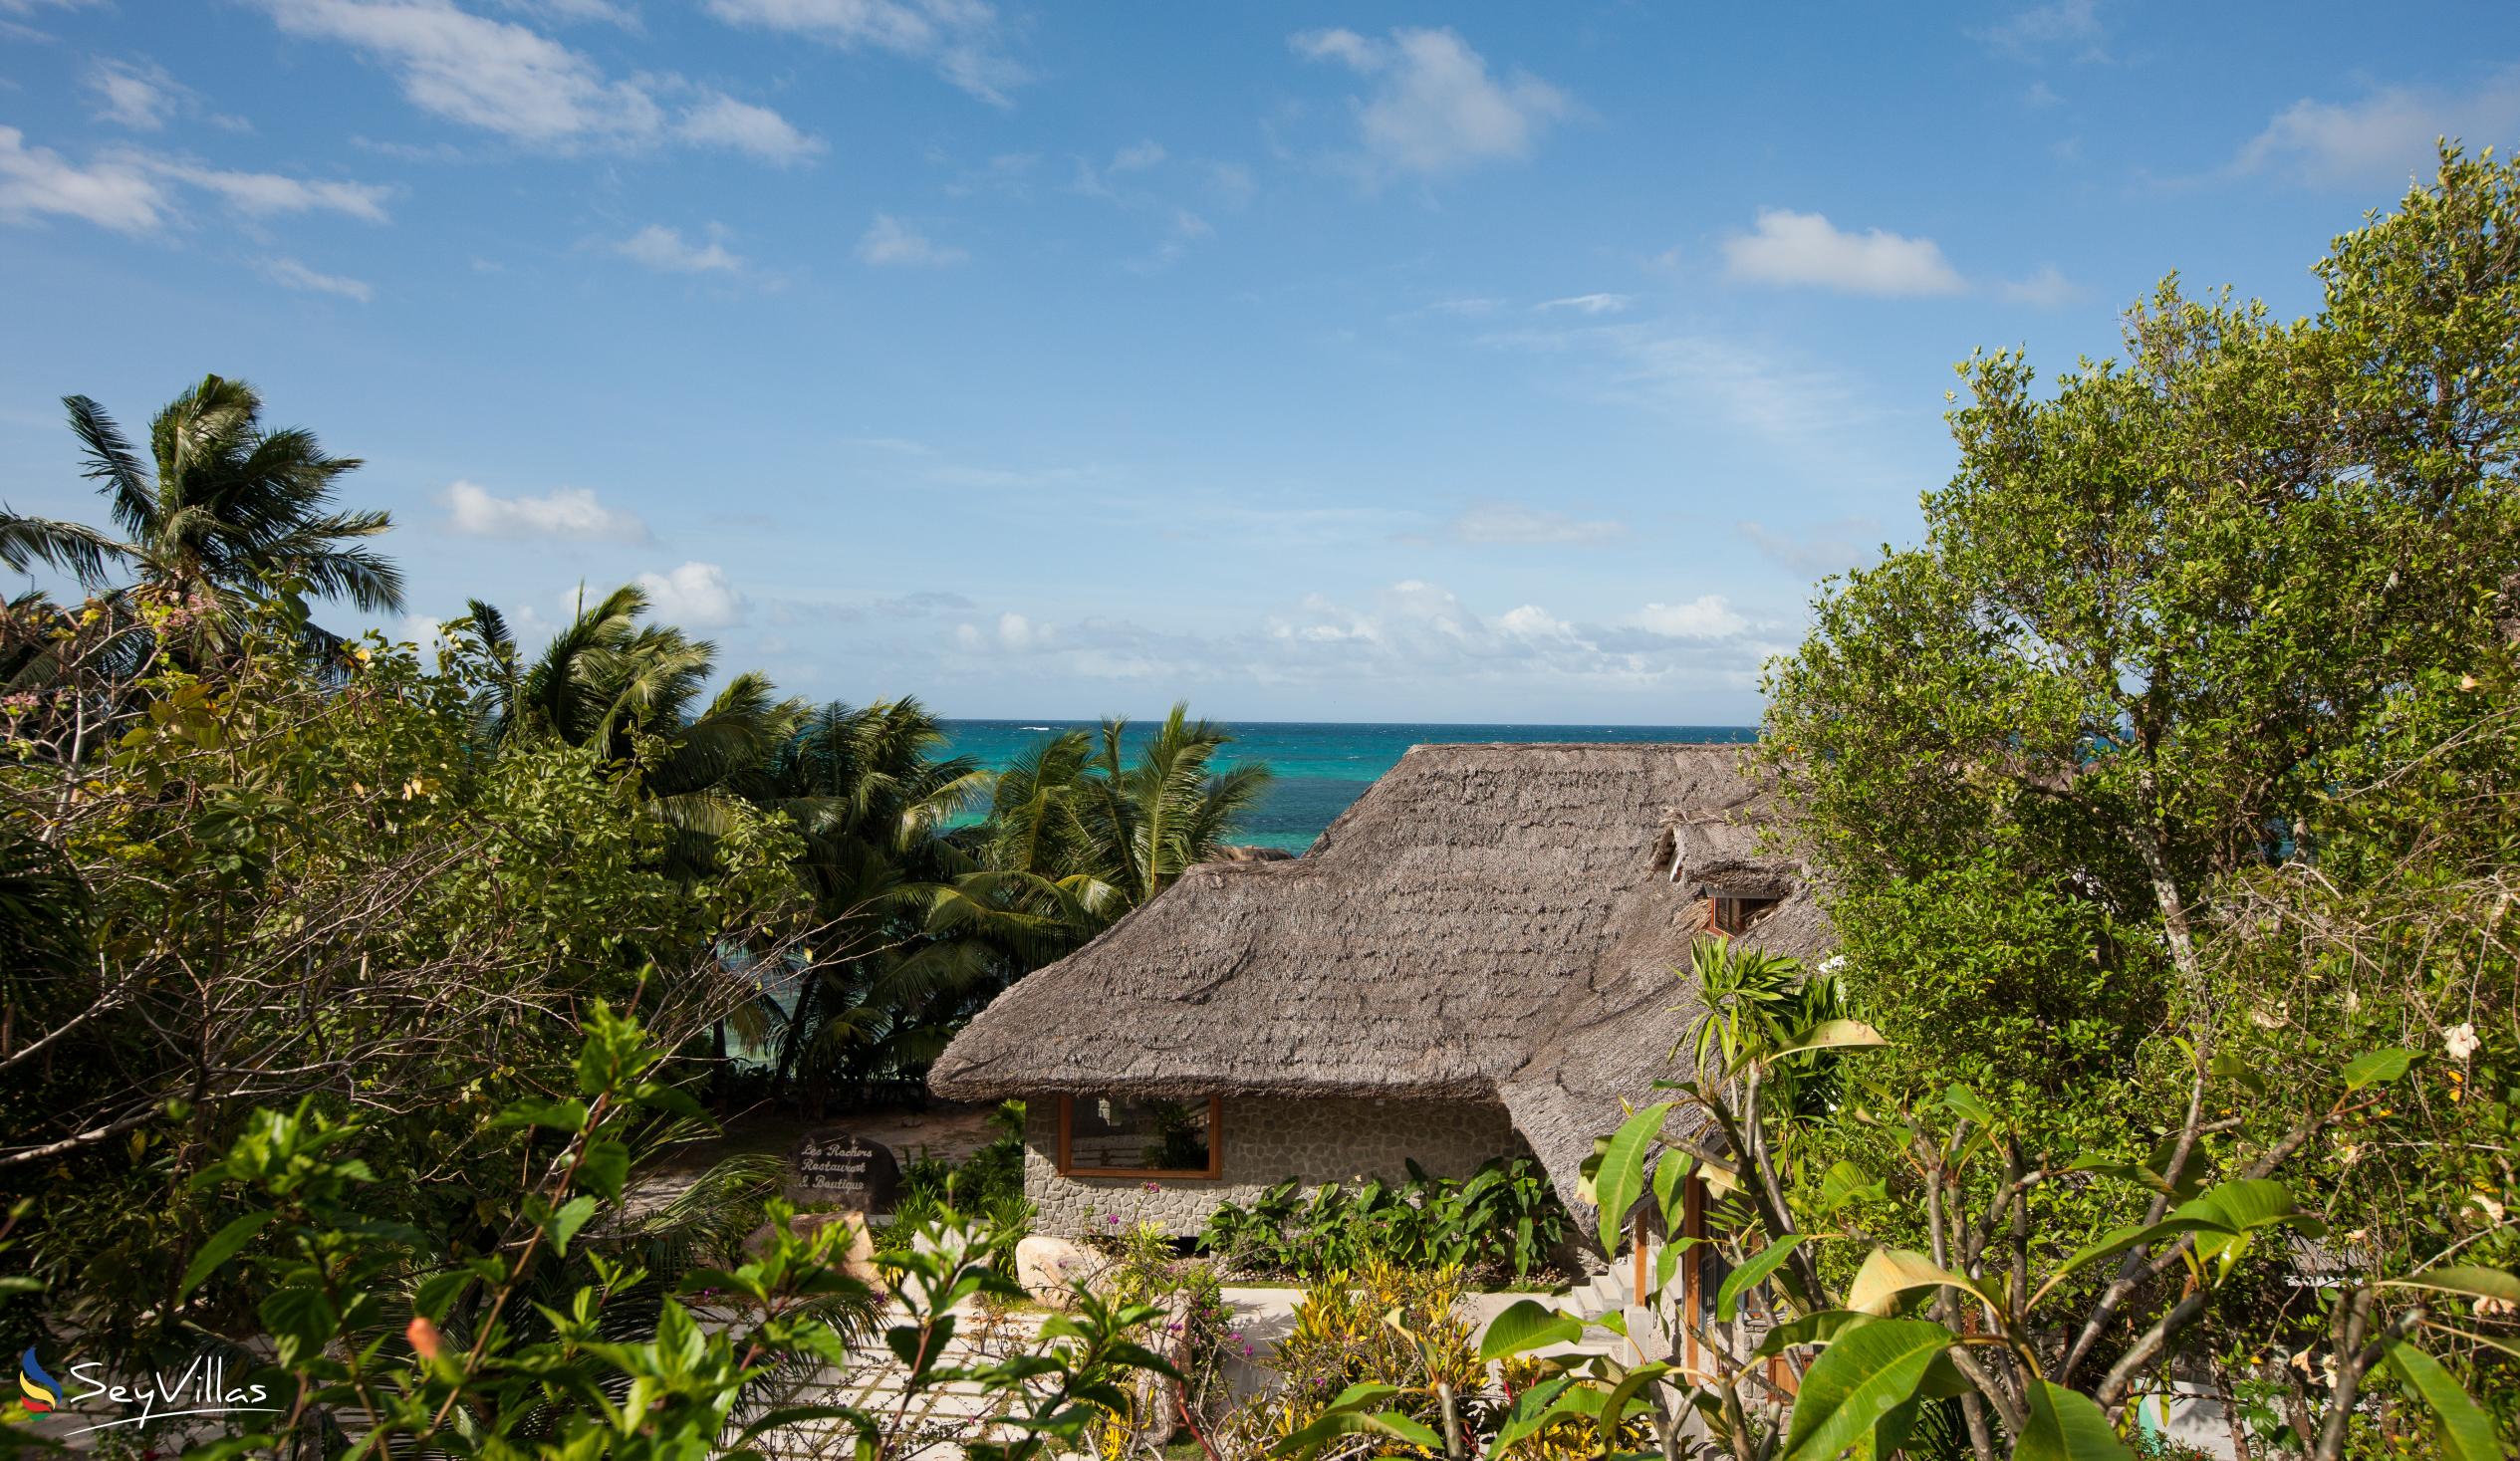 Photo 29: YASAD Luxury Beach Residence - Location - Praslin (Seychelles)